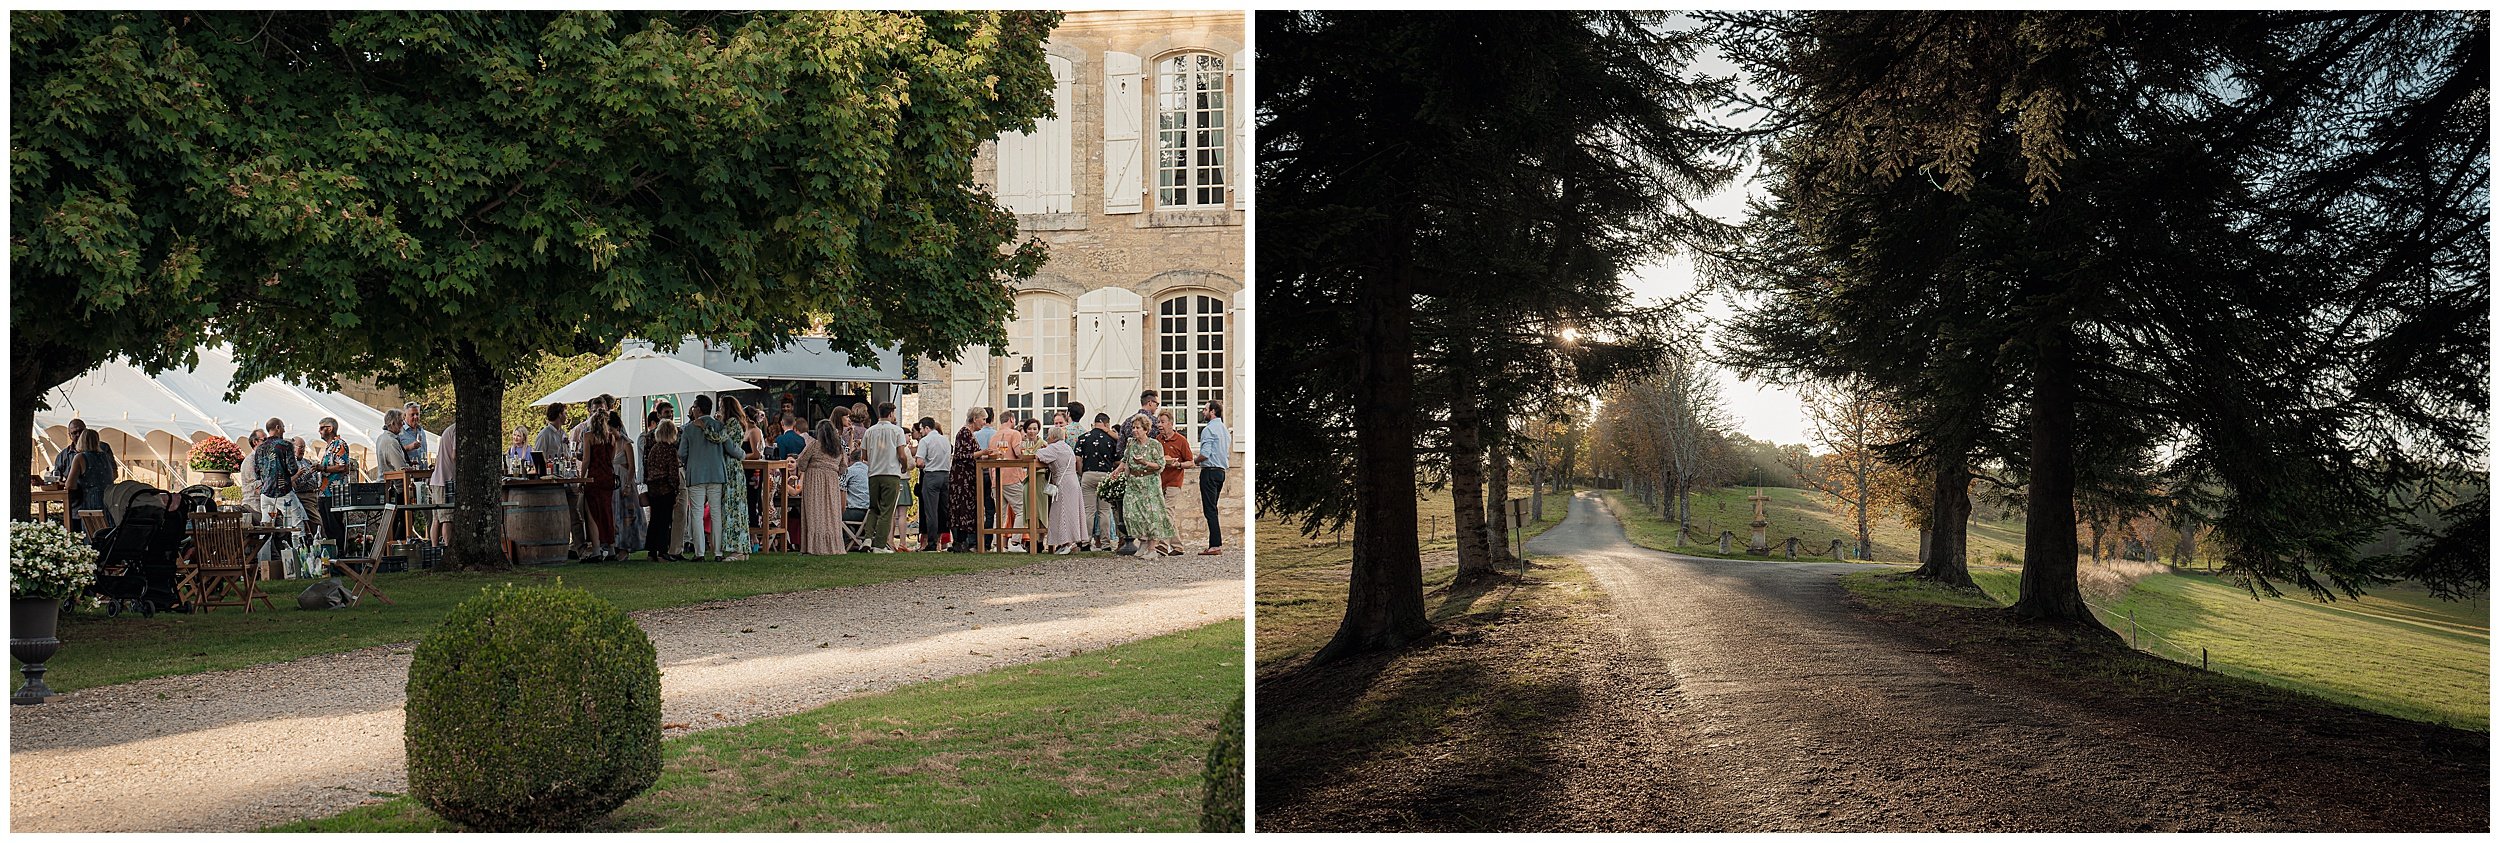 Chateau_de_Lacoste_wedding_017.JPG